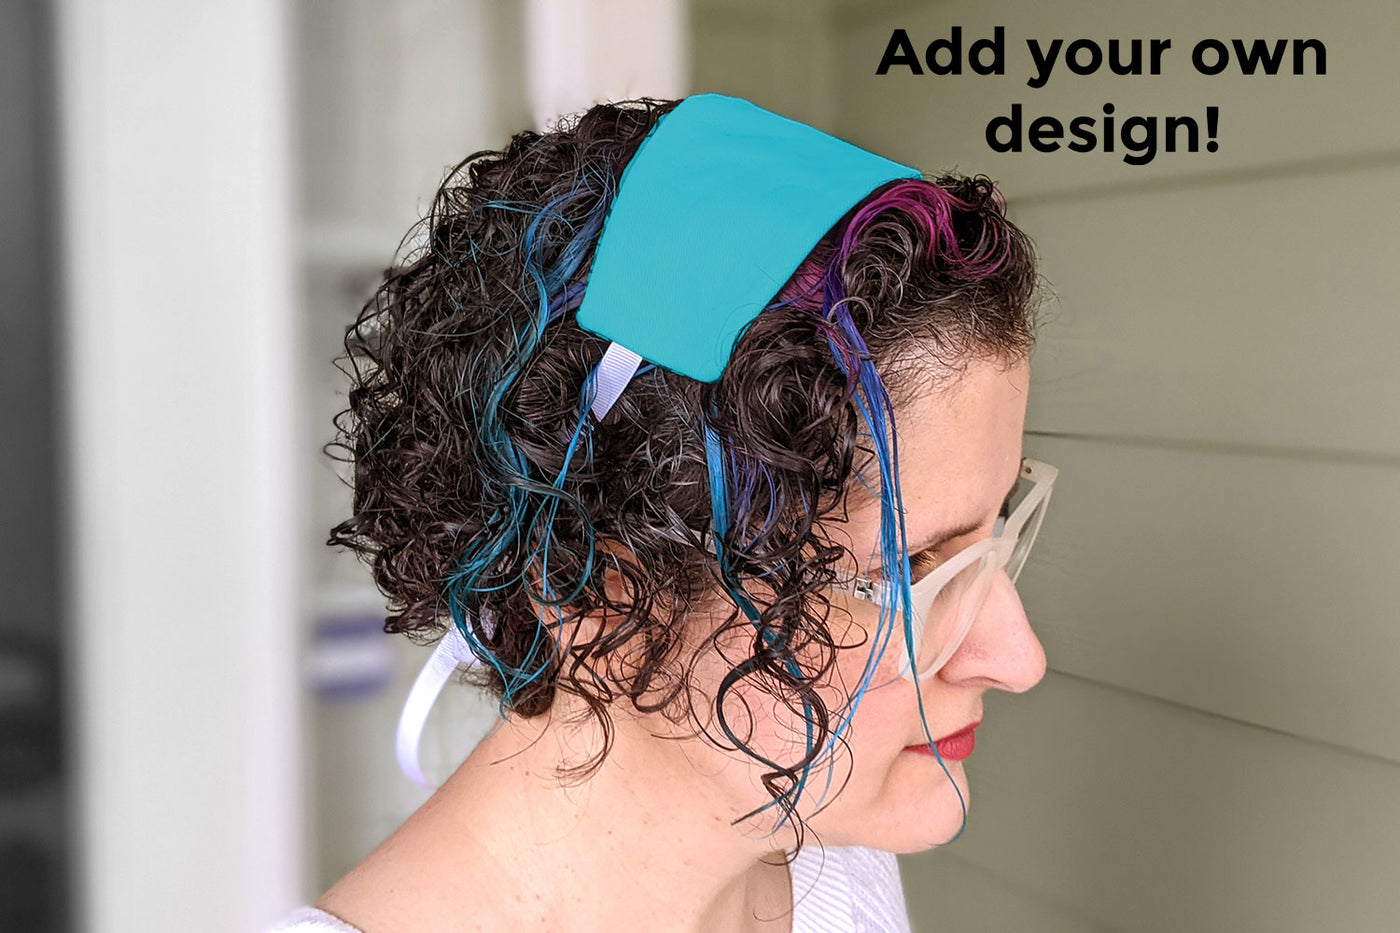 Fabric headband ITH applique embroidery design file - Add your own design!